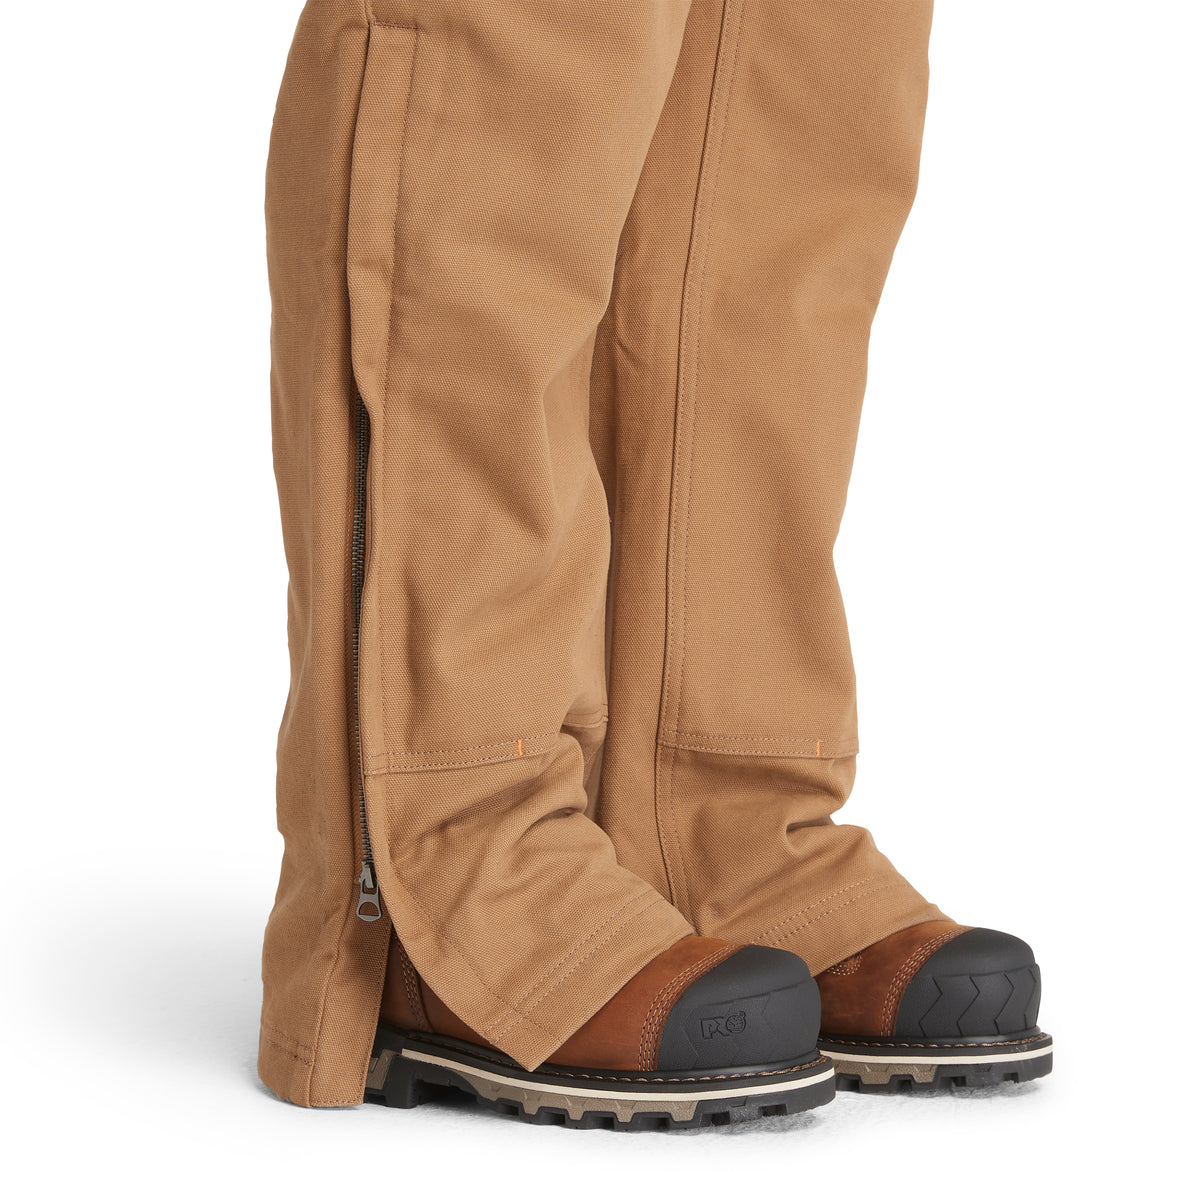 Timberland PRO (W) Gritman Insultd Dbl-Frnt Bib Overall - Work World - Workwear, Work Boots, Safety Gear